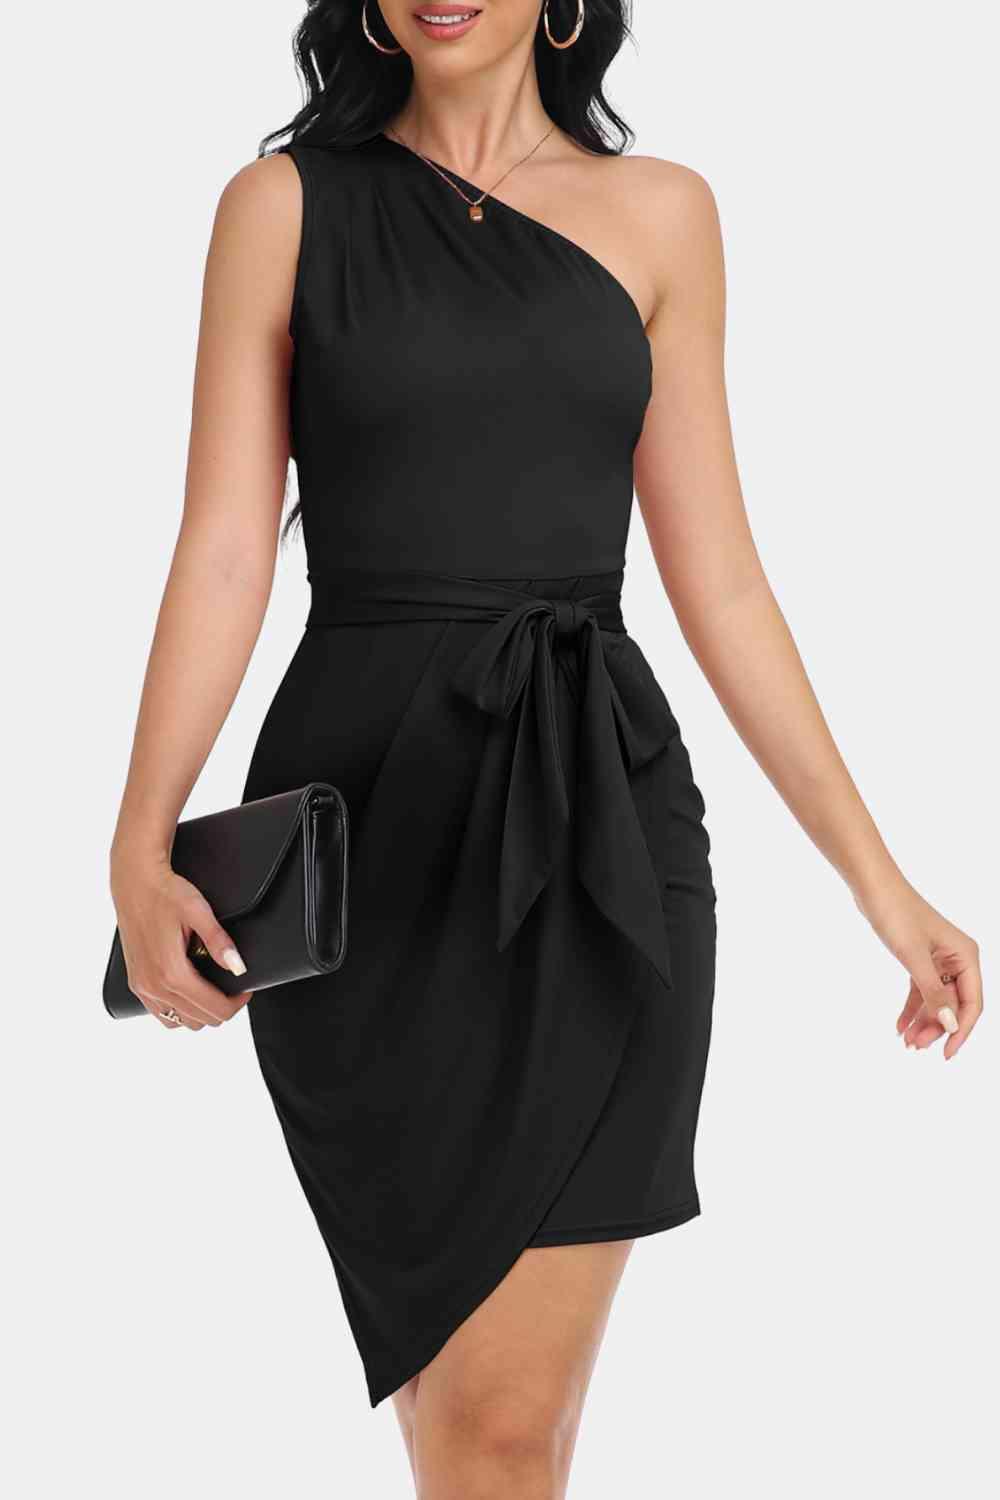 Tie Front One-Shoulder Sleeveless Dress - Bona Fide Fashion